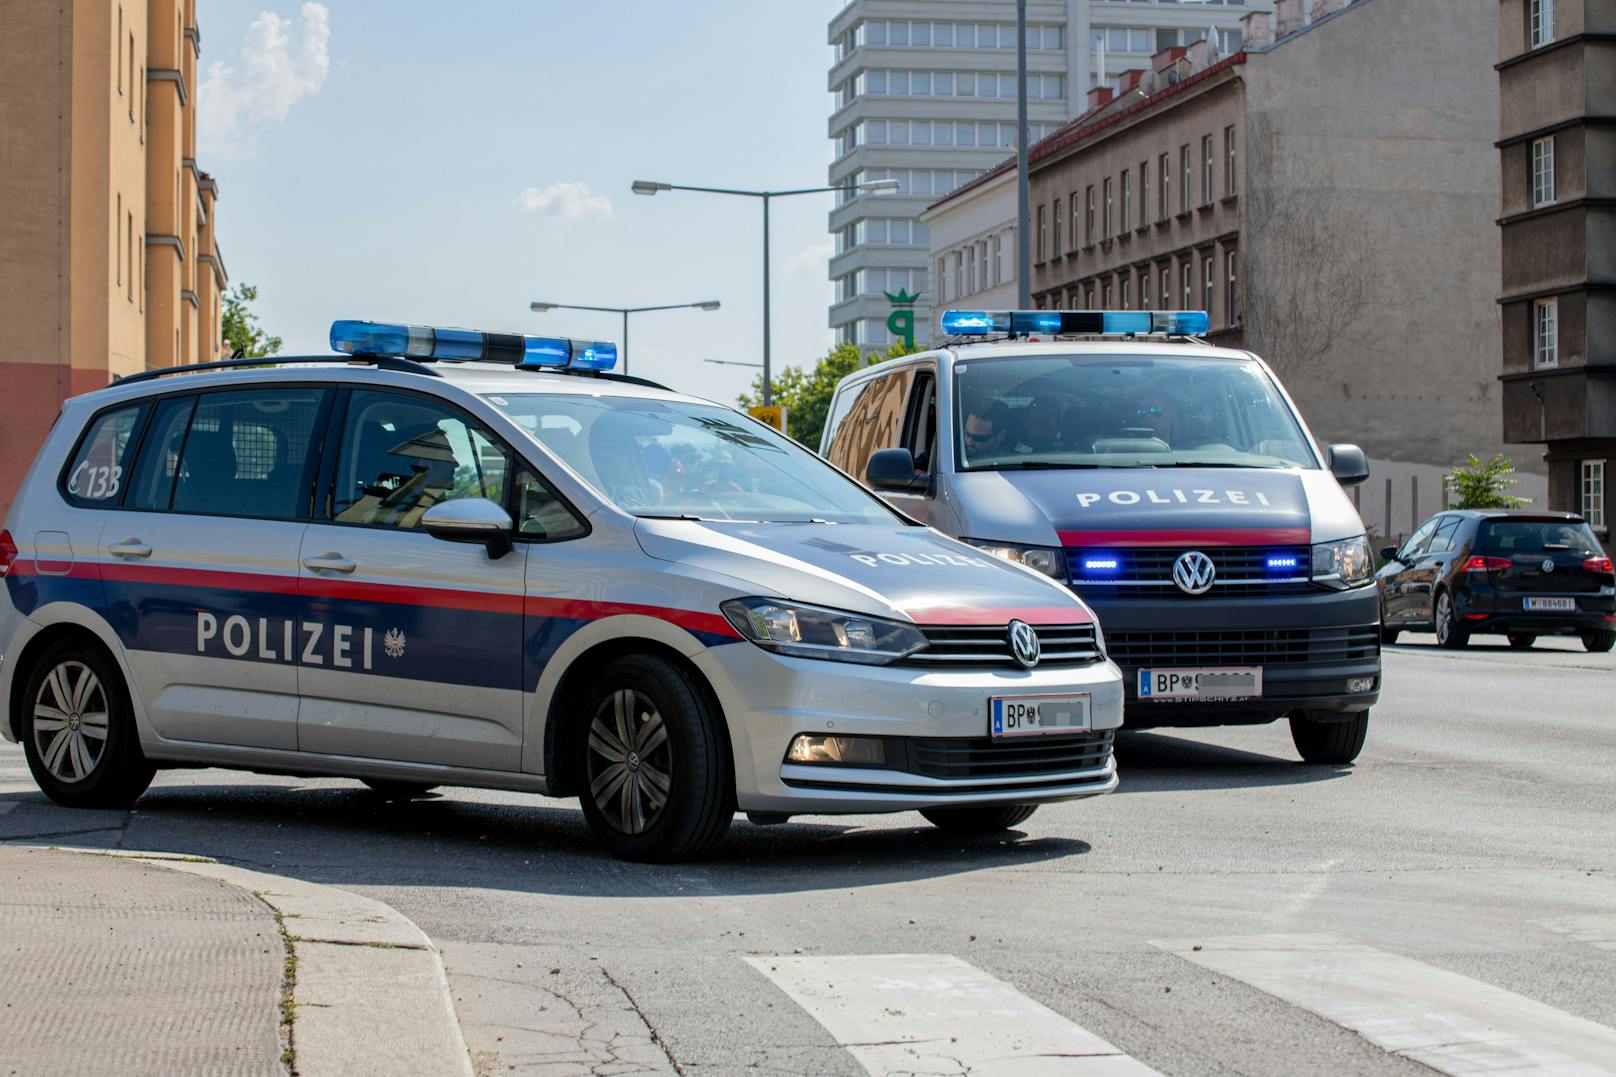 Polizei crasht "Heroinparty" in Favoriten